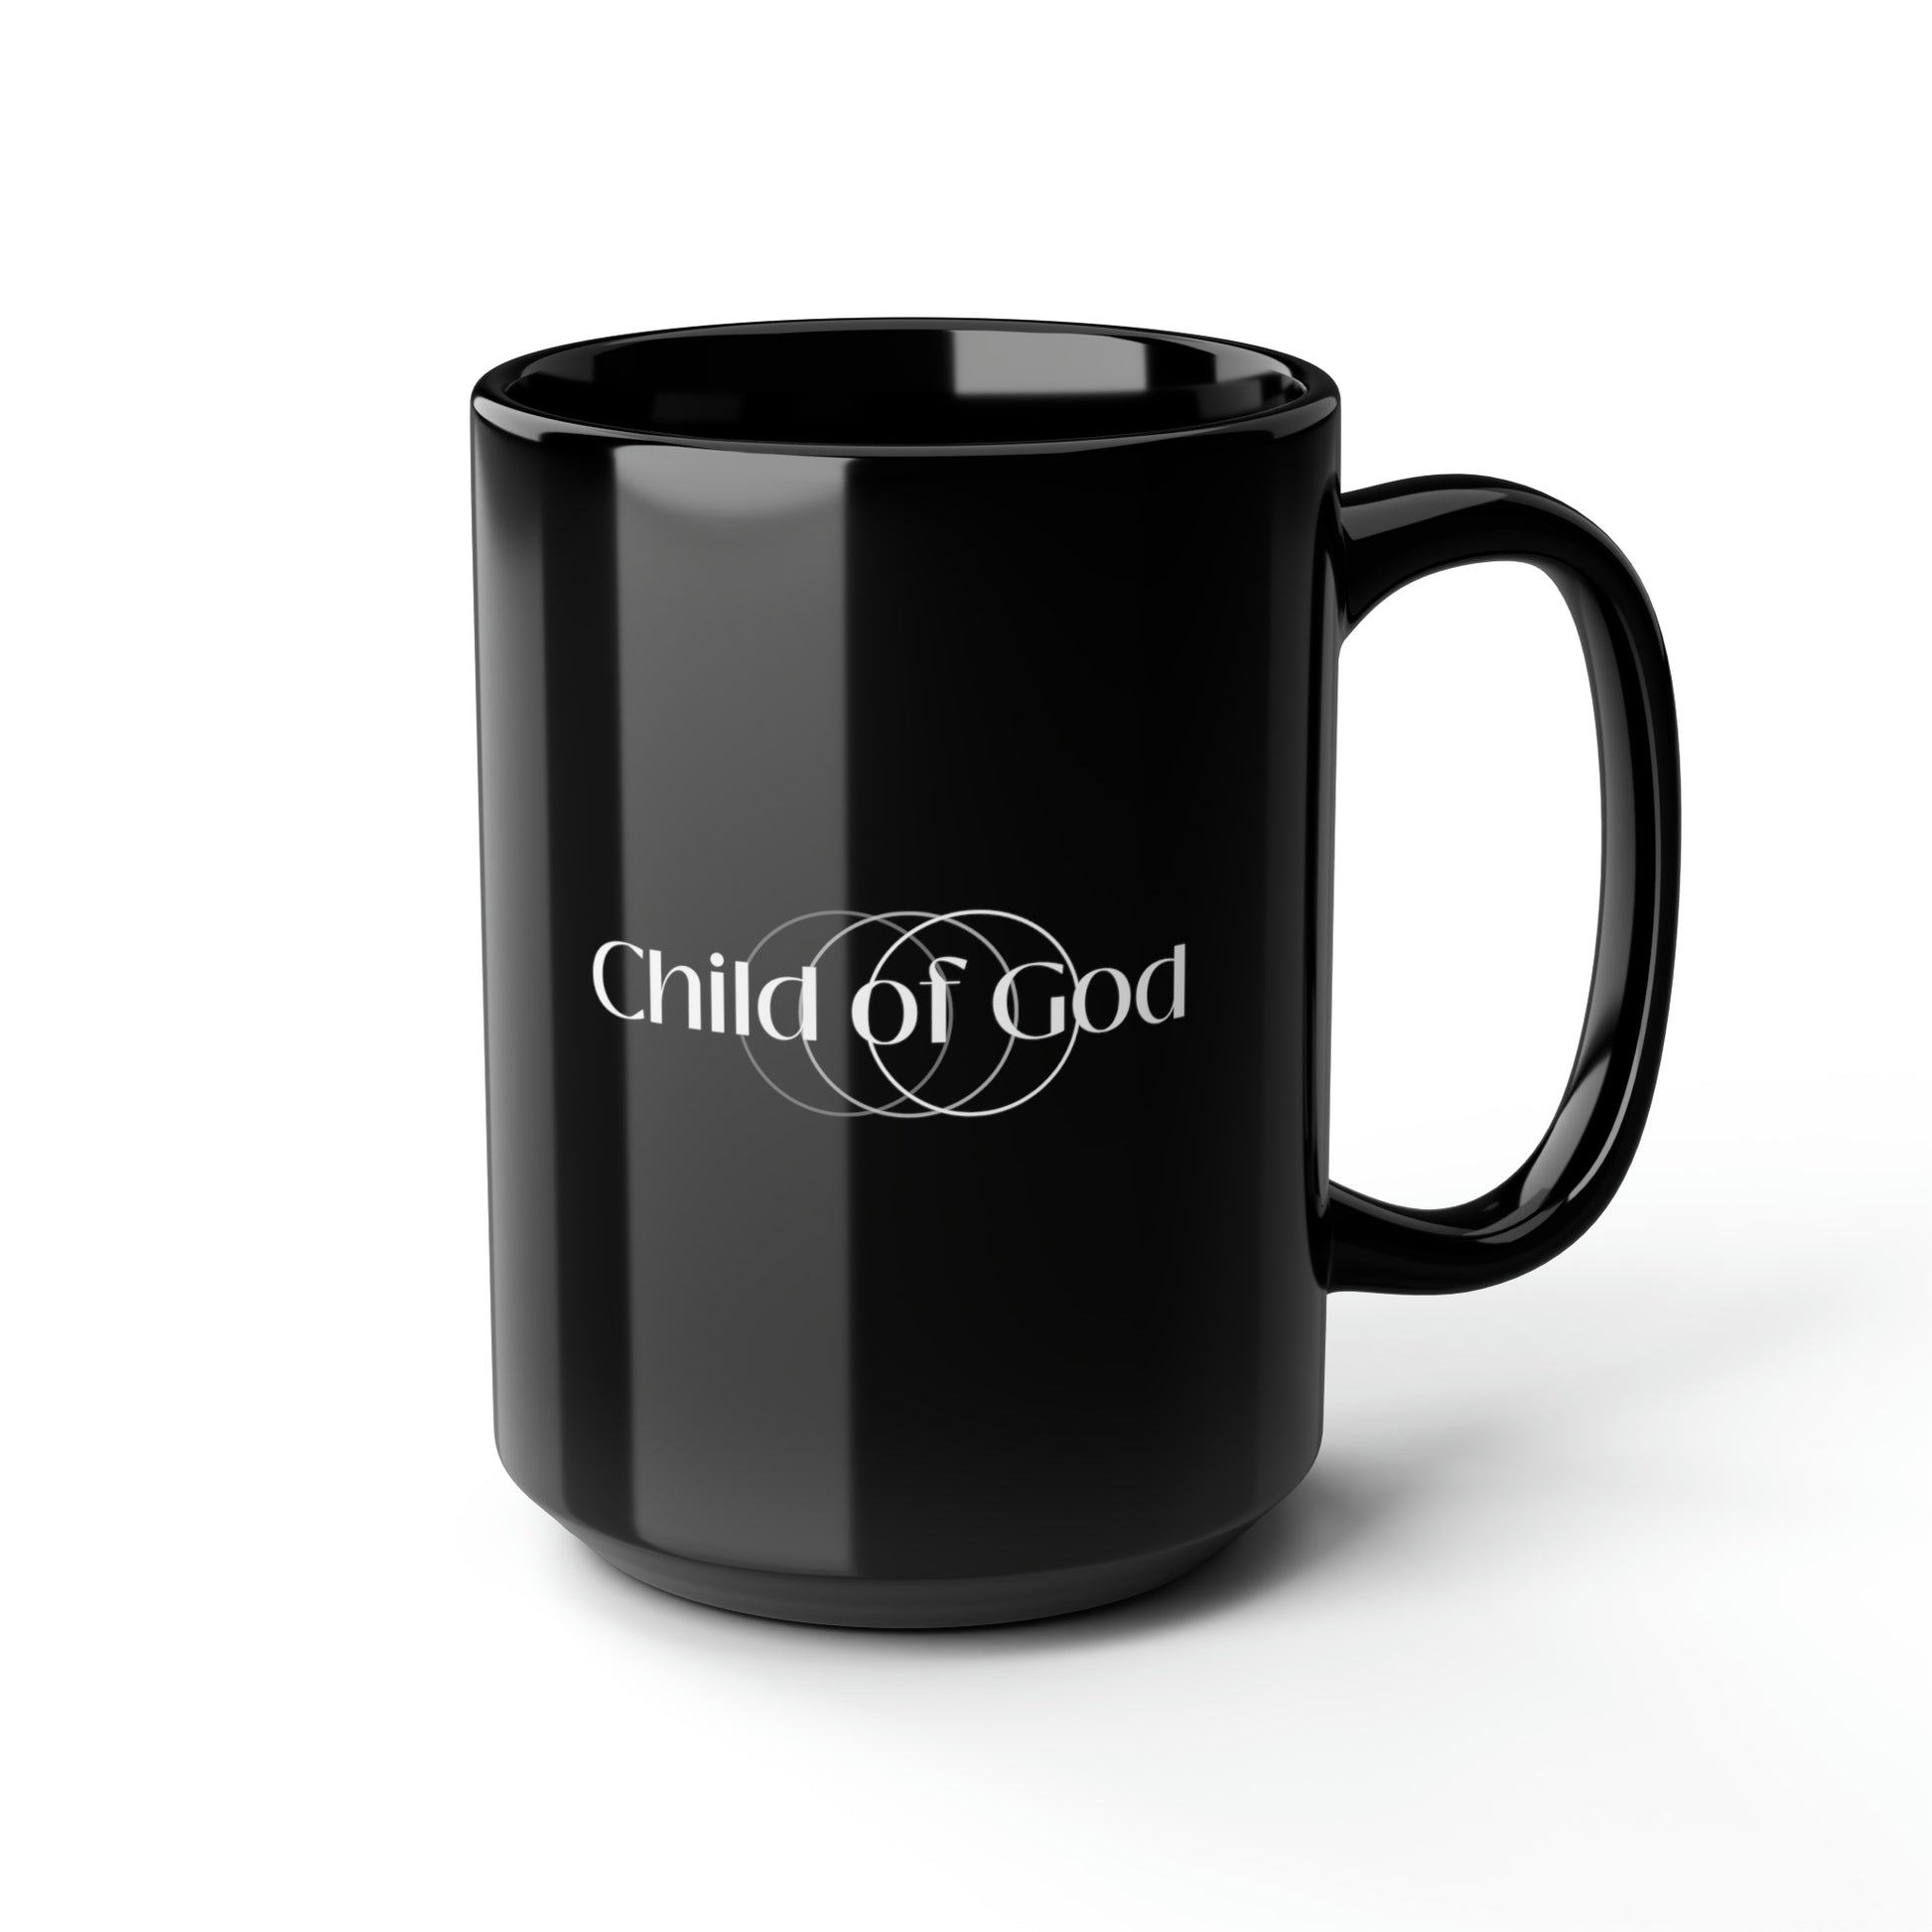 Child Of God Nutrition Facts Black Ceramic Mug, 15oz (double sided print) Printify